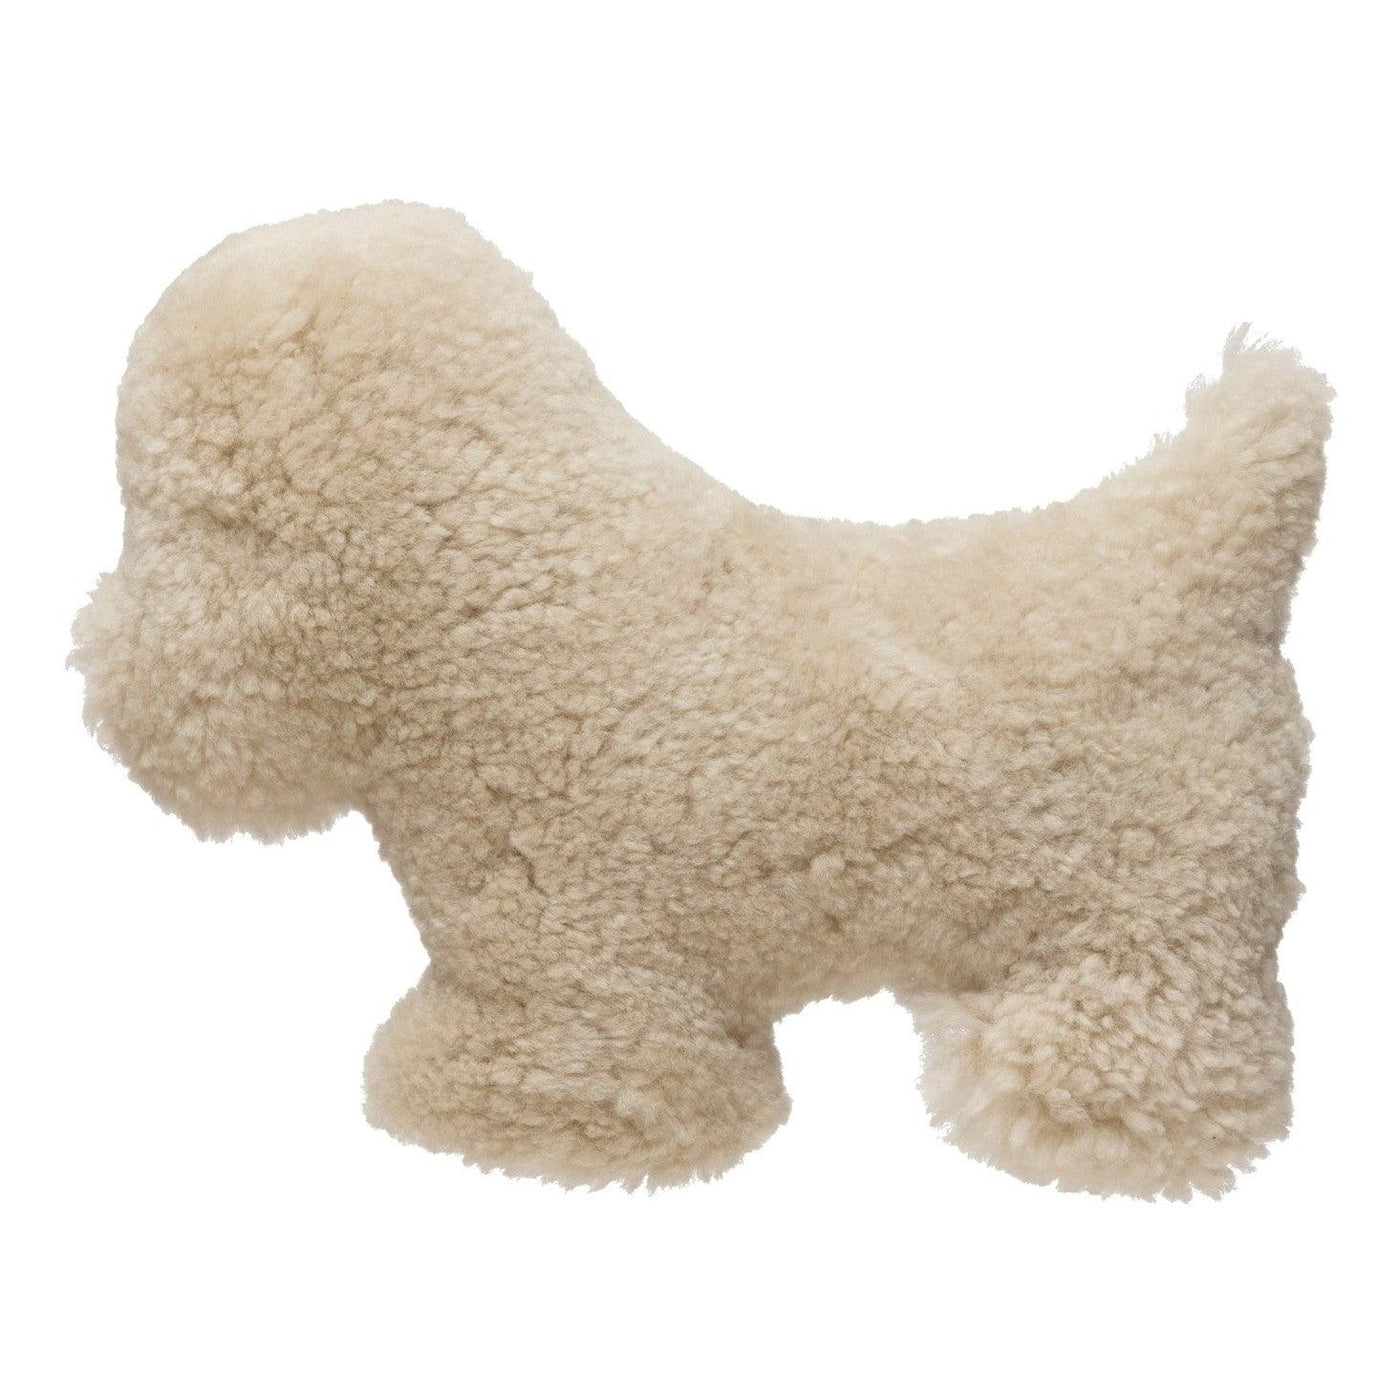 17" x 11" New Zealand Lamb Fur Dog Shaped Pillow - Birch and Bind